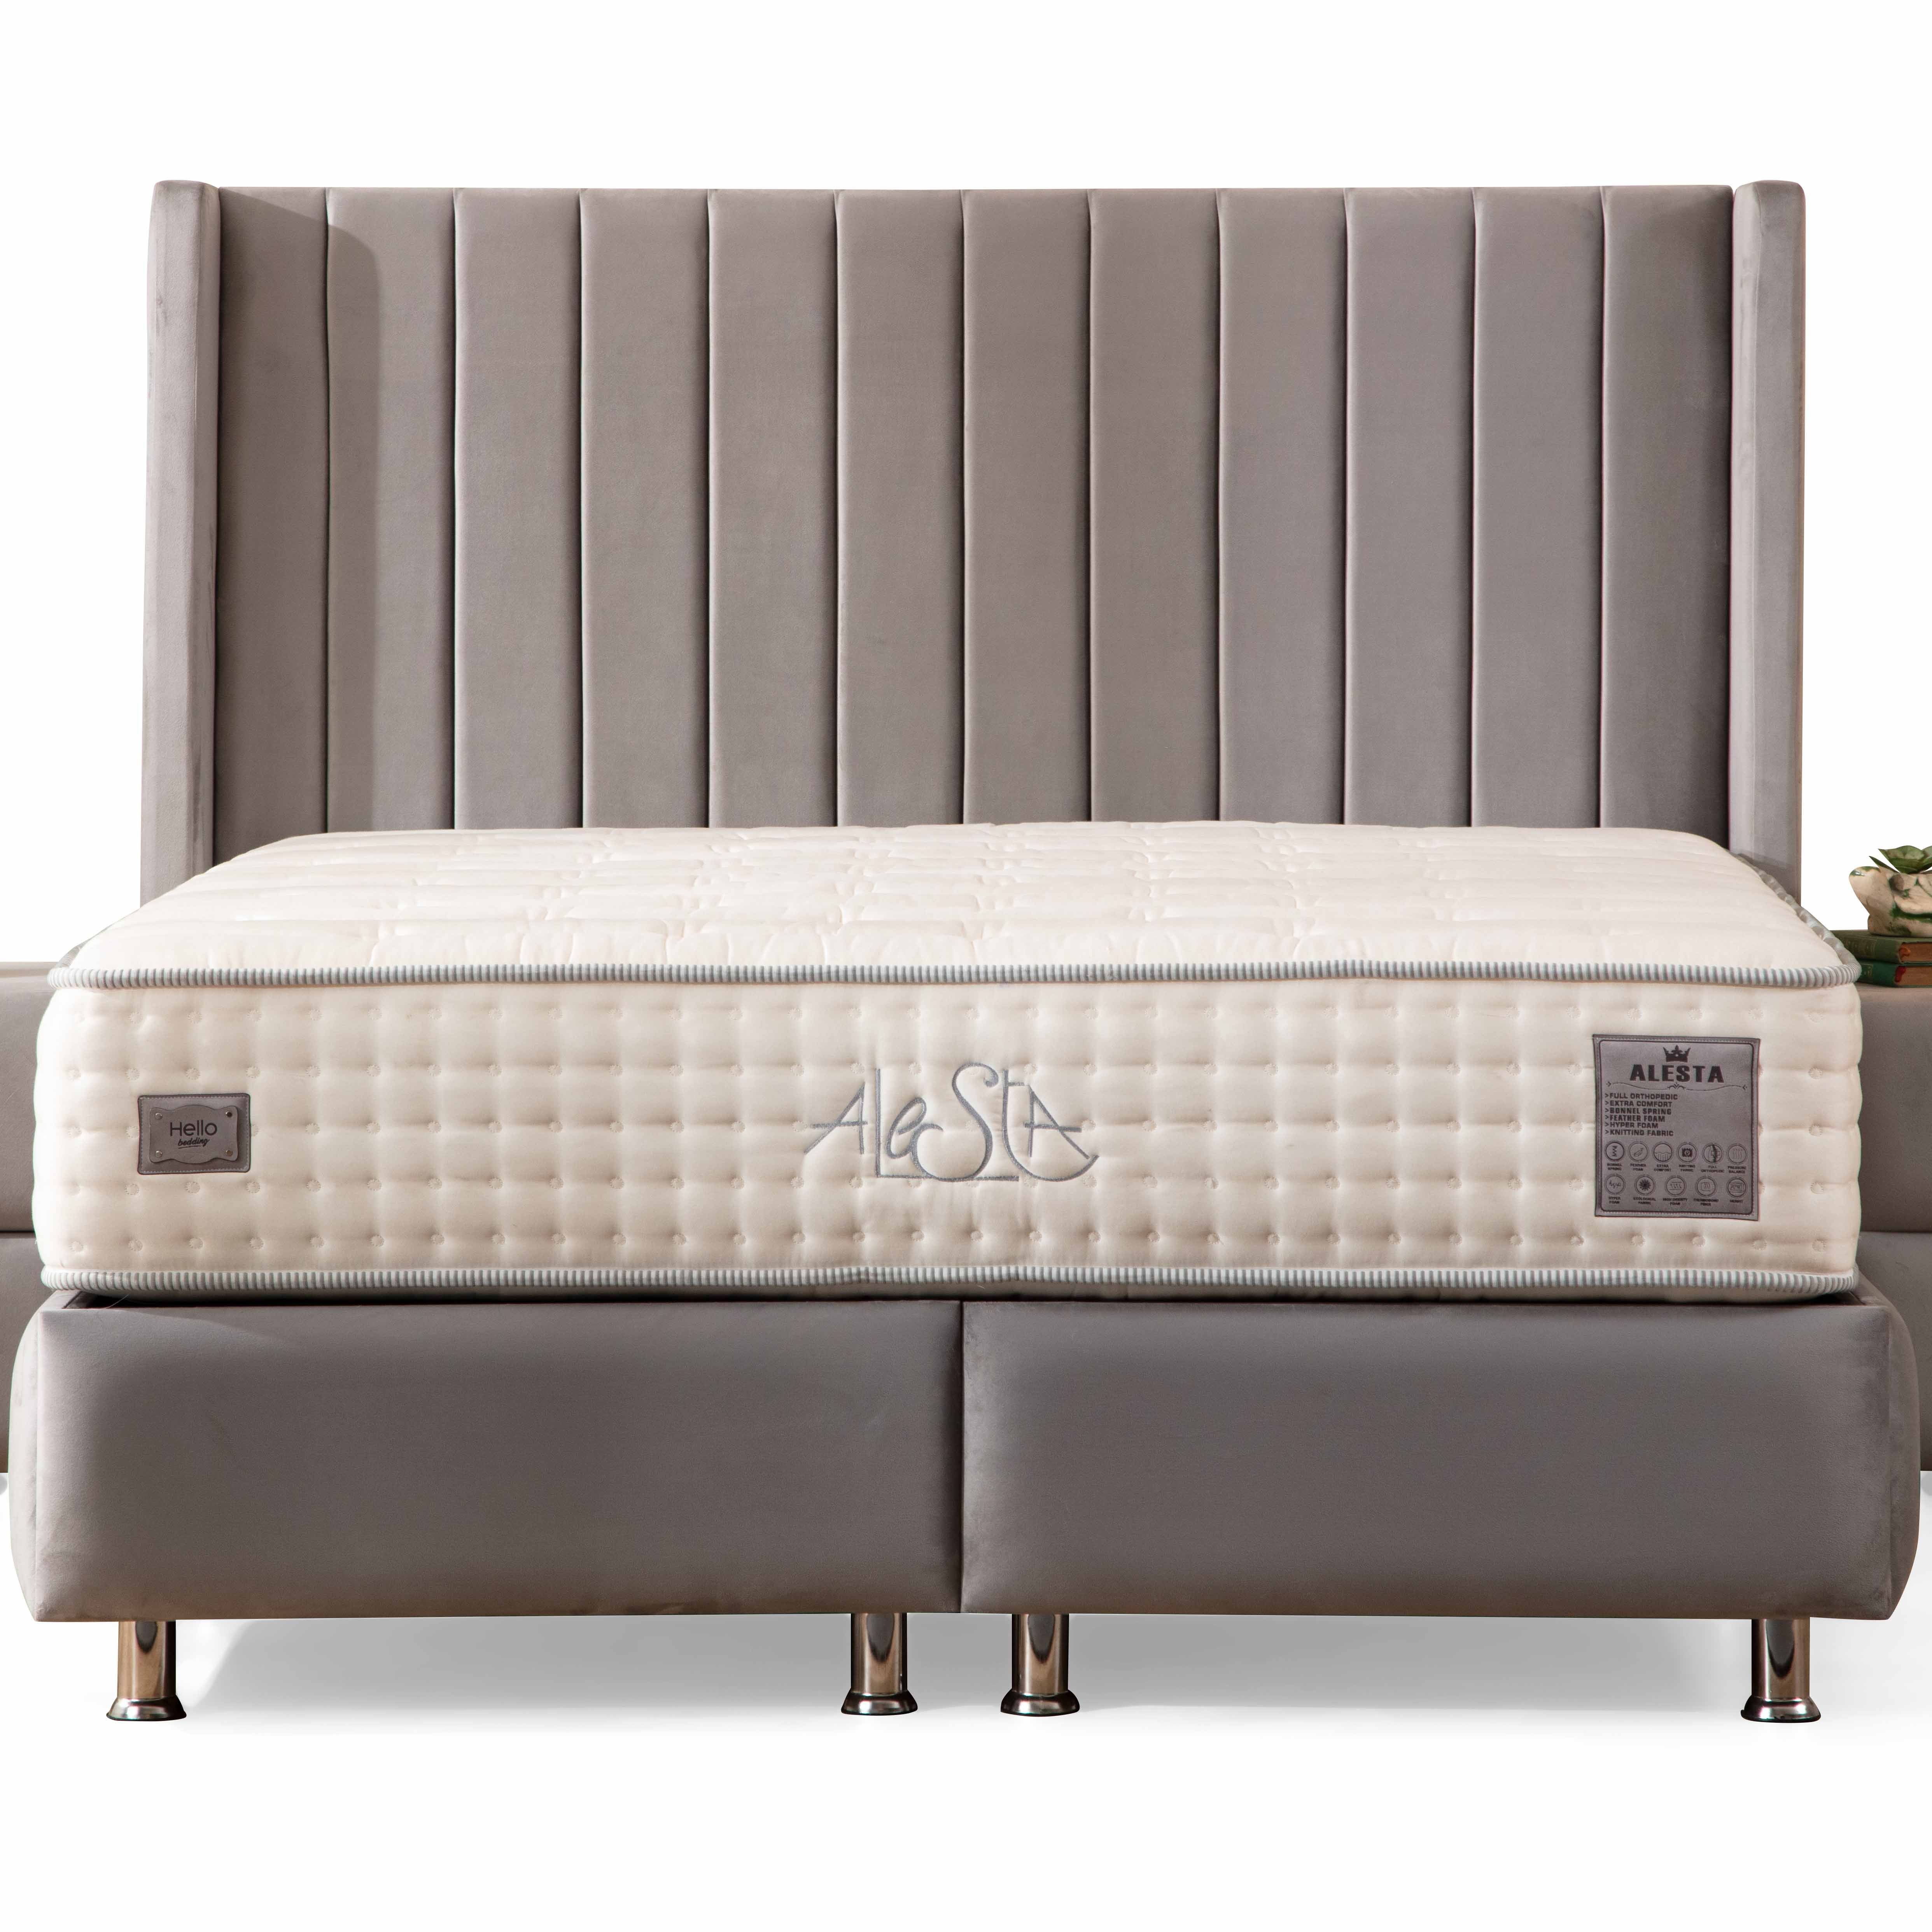 Tokyo Bed With Storage 160x200 cm